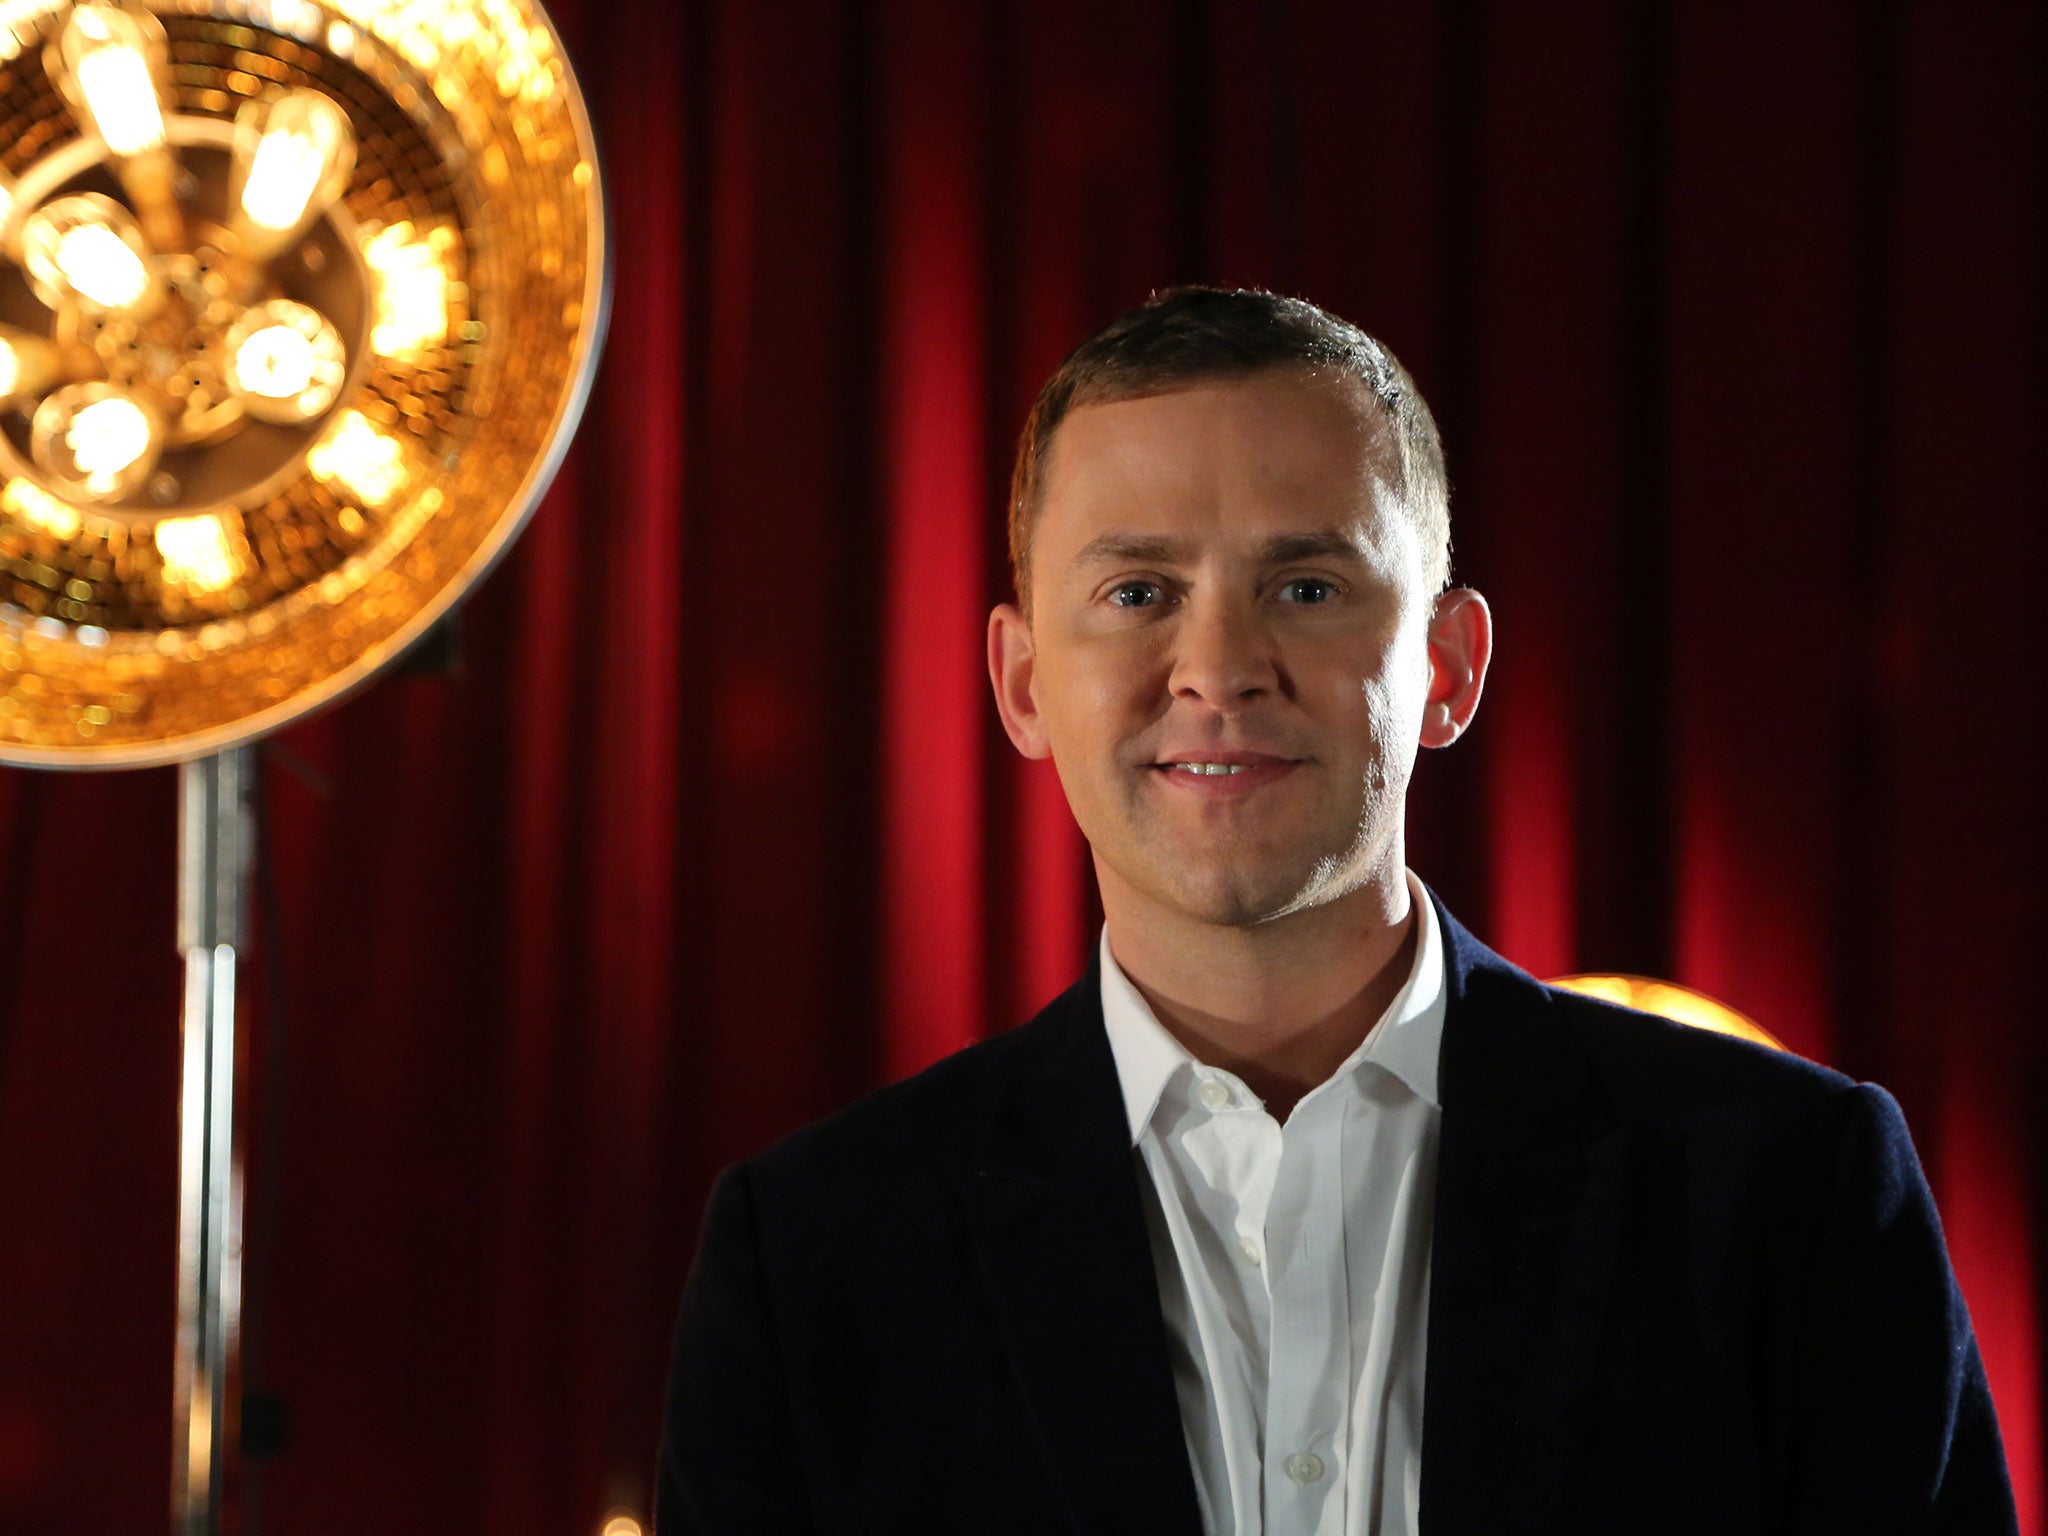 Radio presenter Scott Mills will be hitting the Strictly Come Dancing ballroom